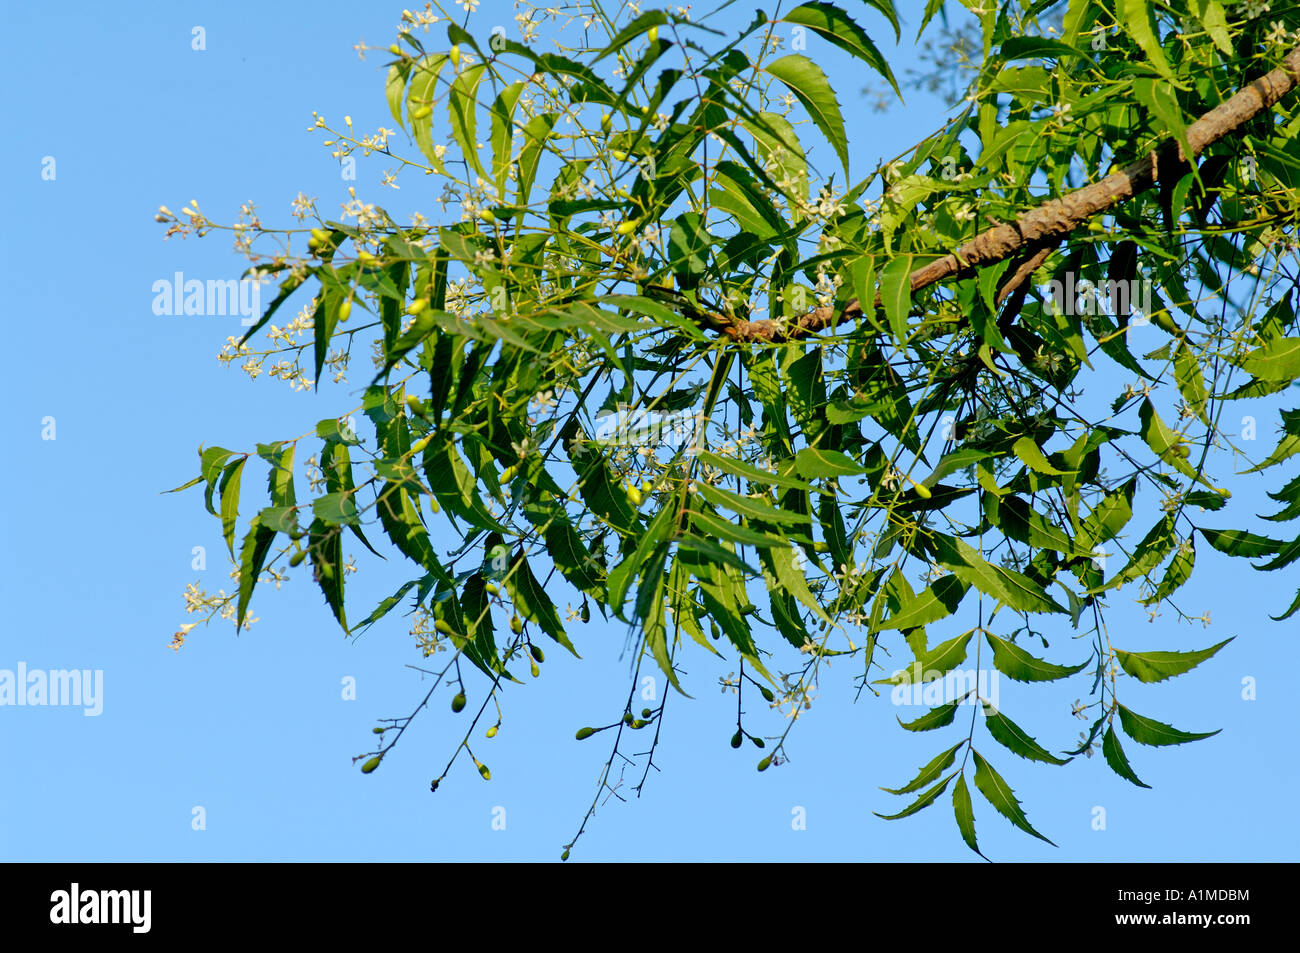 Albero di Neem pianta medicinale foglie verdi Foto Stock